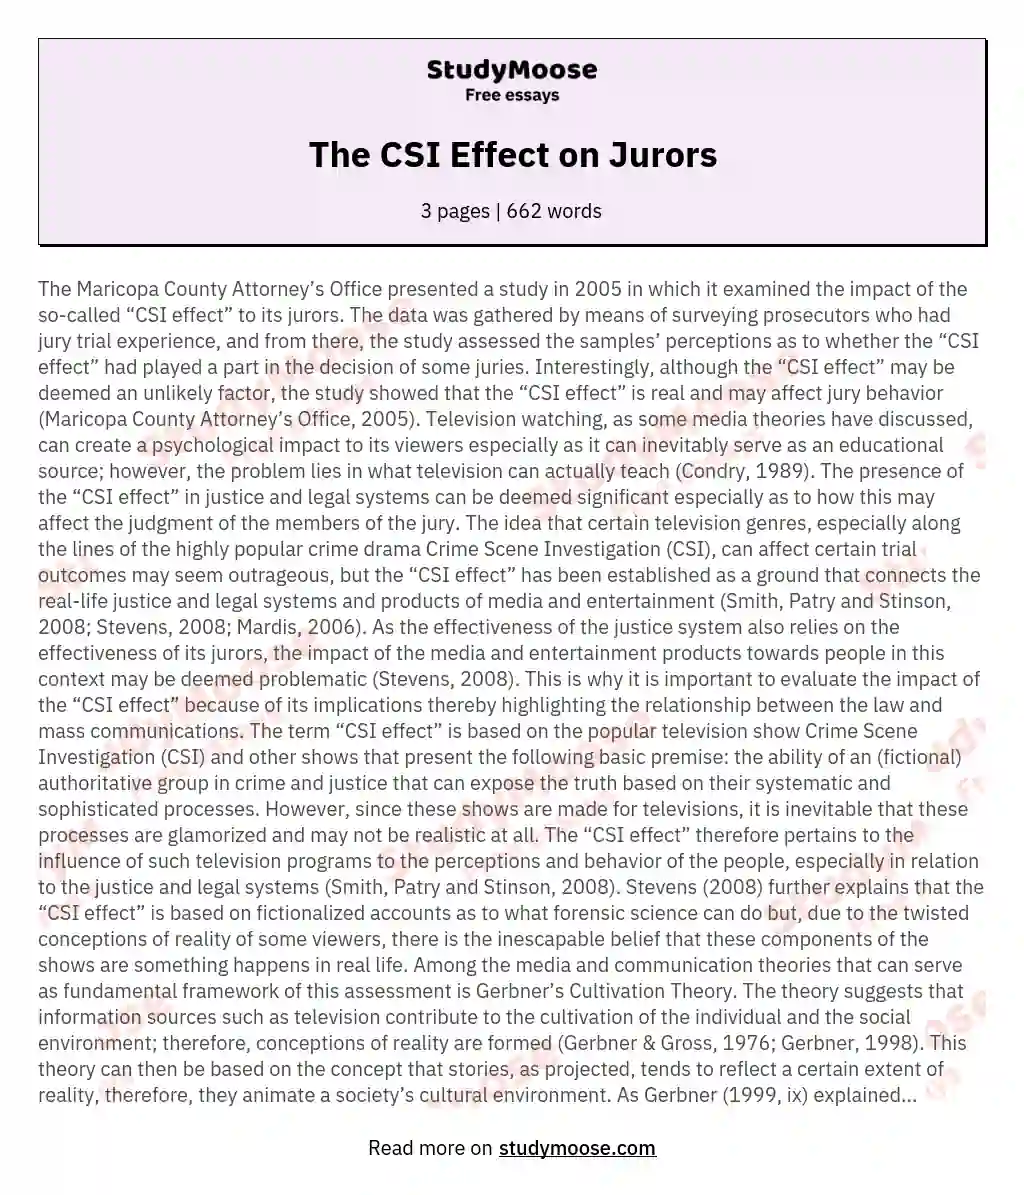 The CSI Effect on Jurors essay